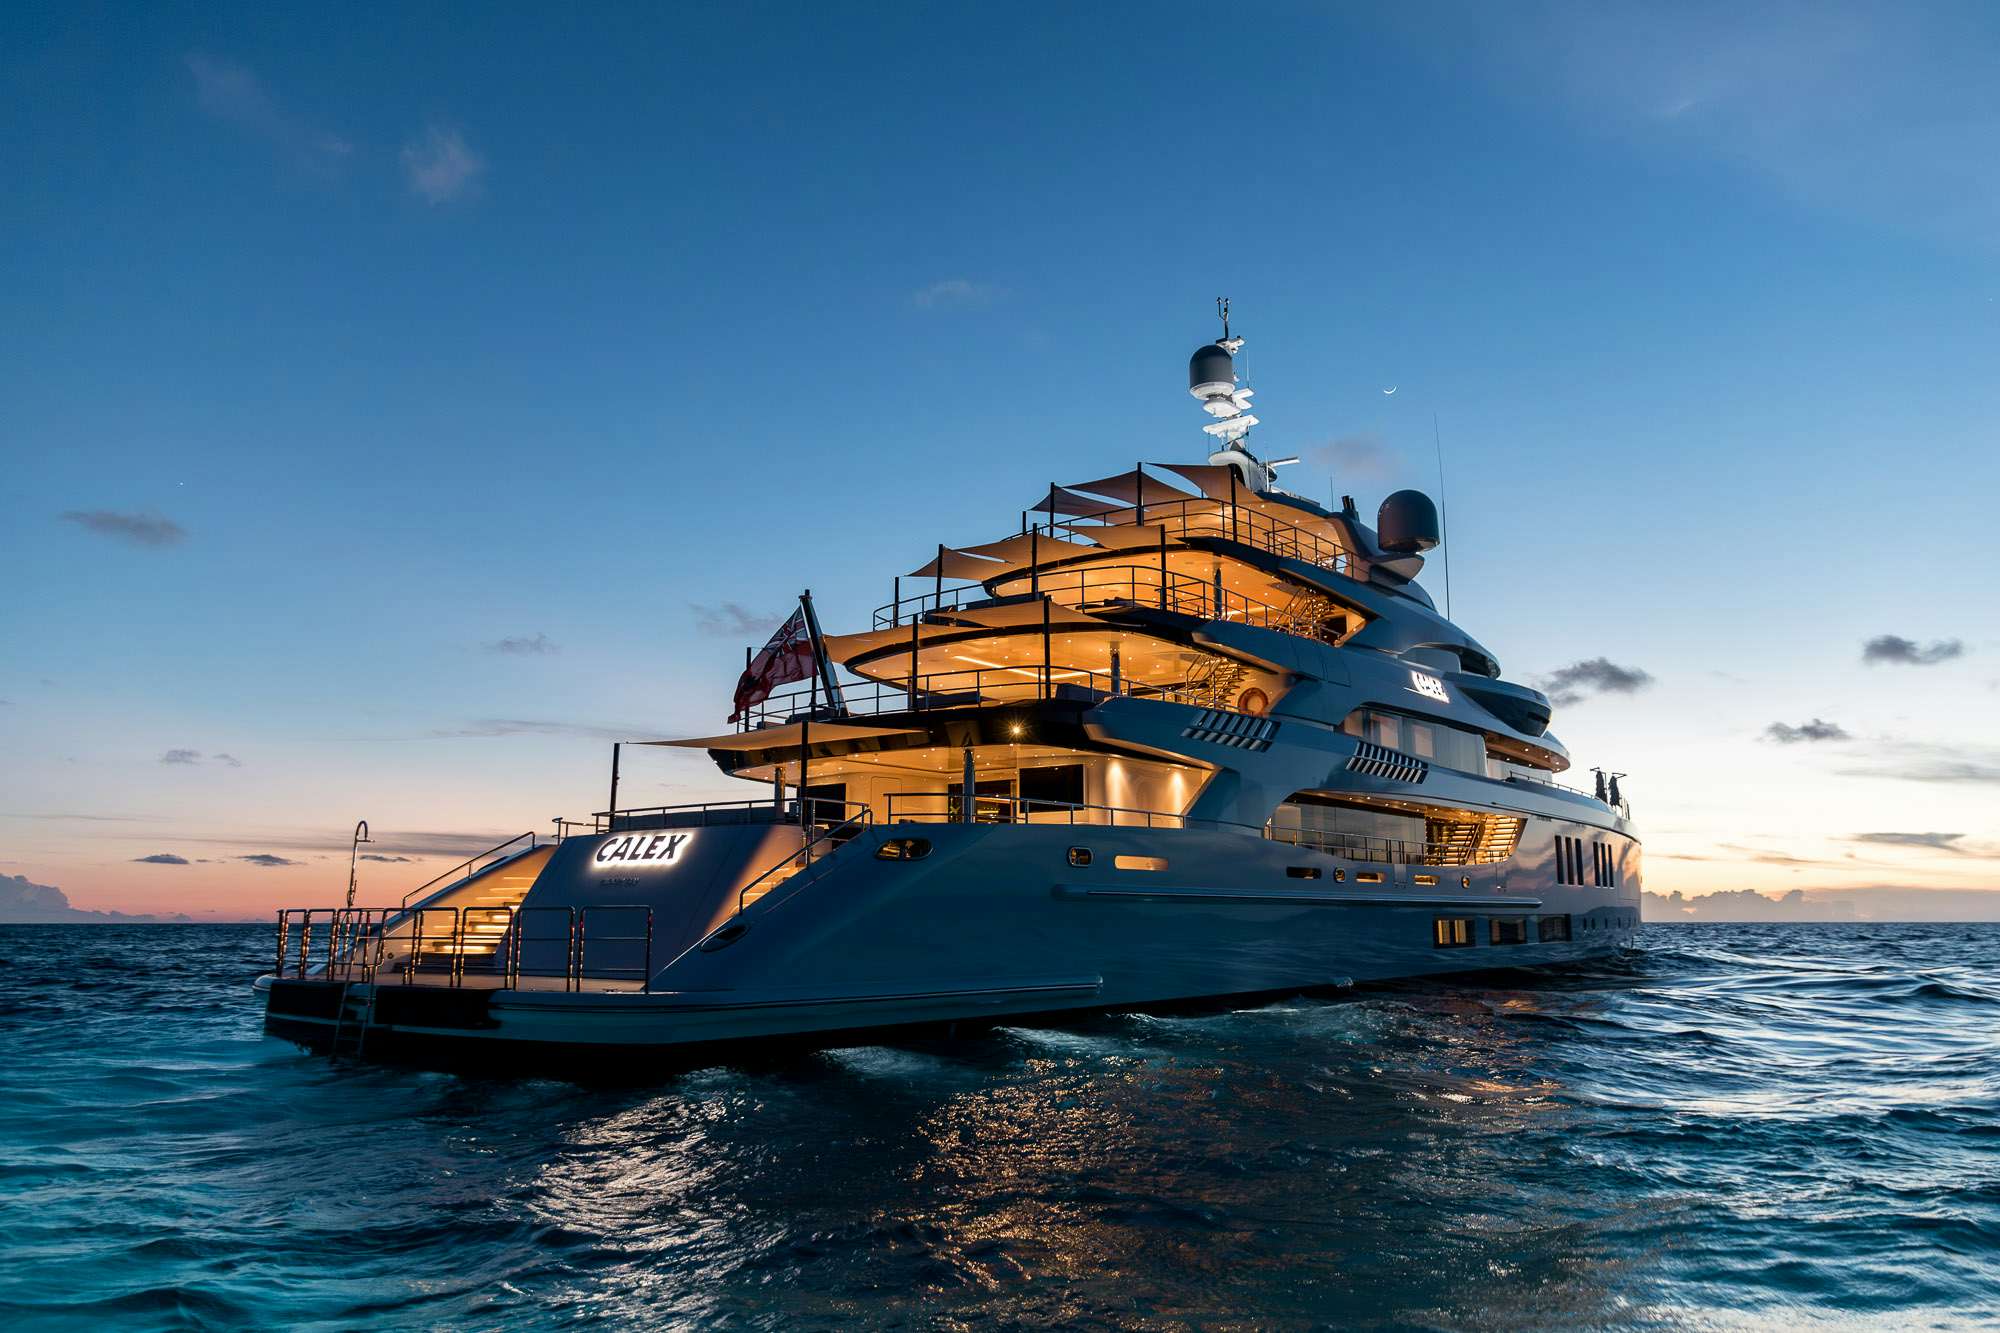 Caribbean yacht charter fleet welcomes 67m superyacht CALEX to its ranks